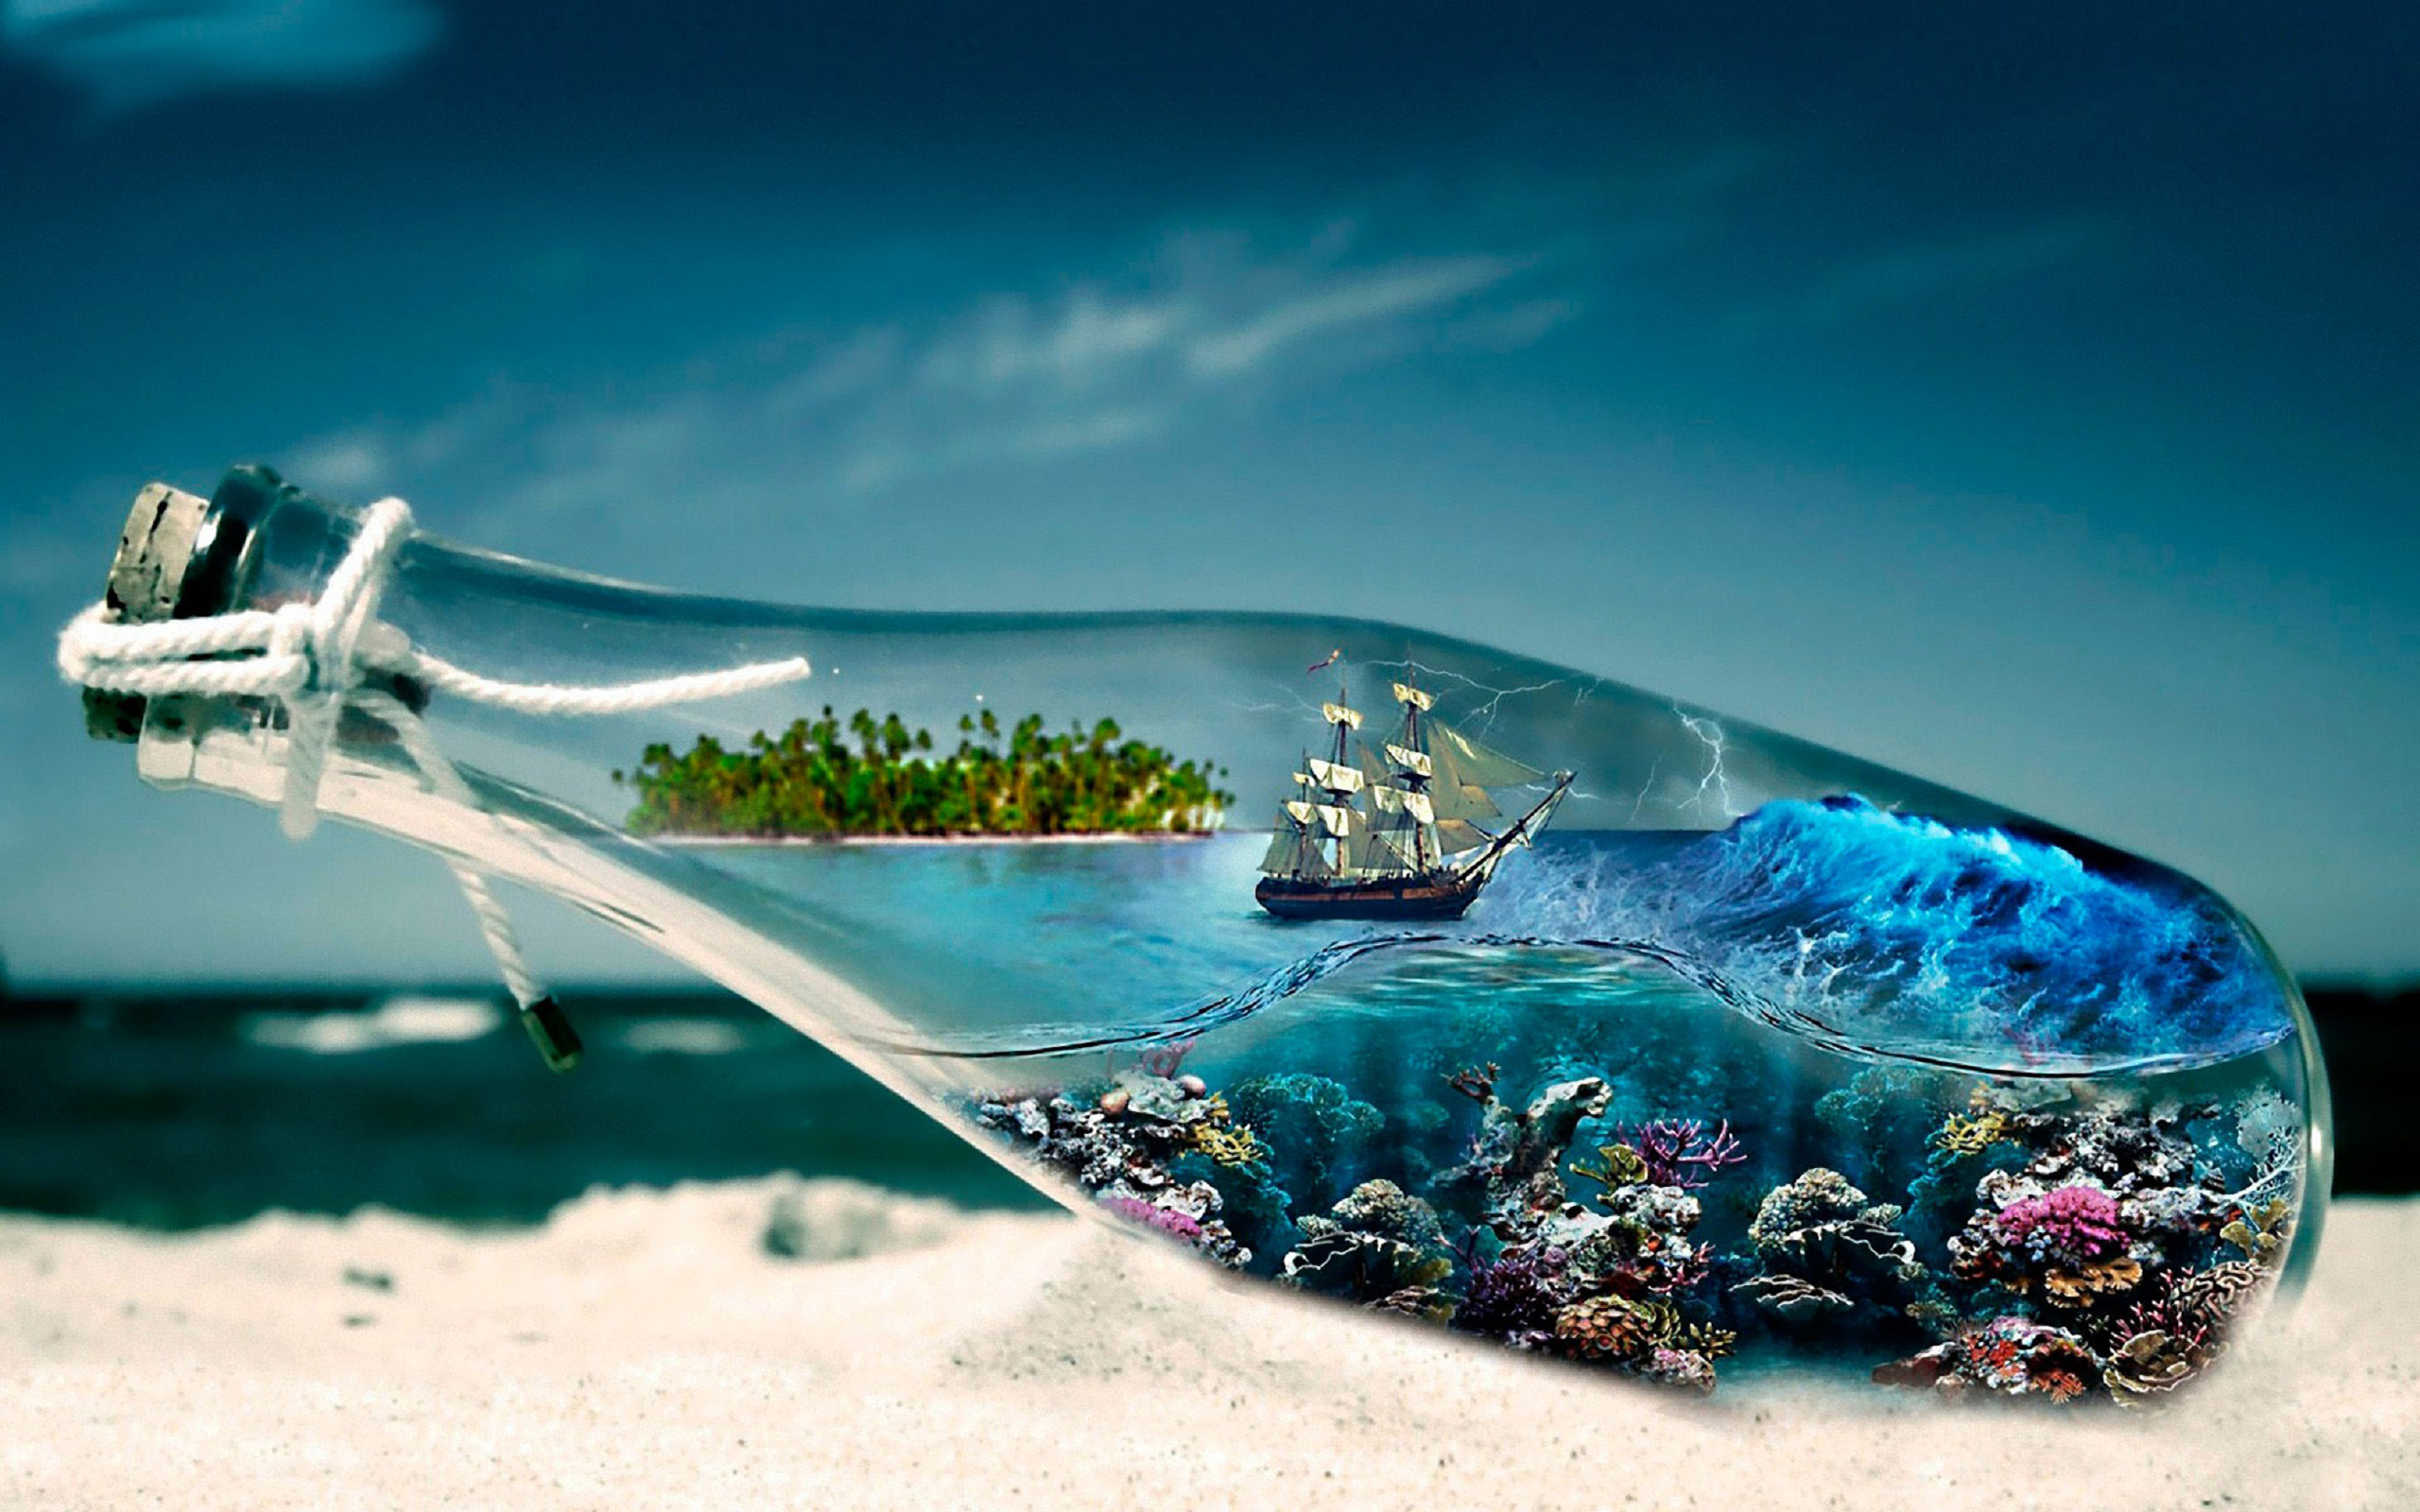 World In Glass Bottle Sea Boat Underwater World Seabed With Corals Desktop Wallpaper HD 2560x1600, Wallpaper13.com